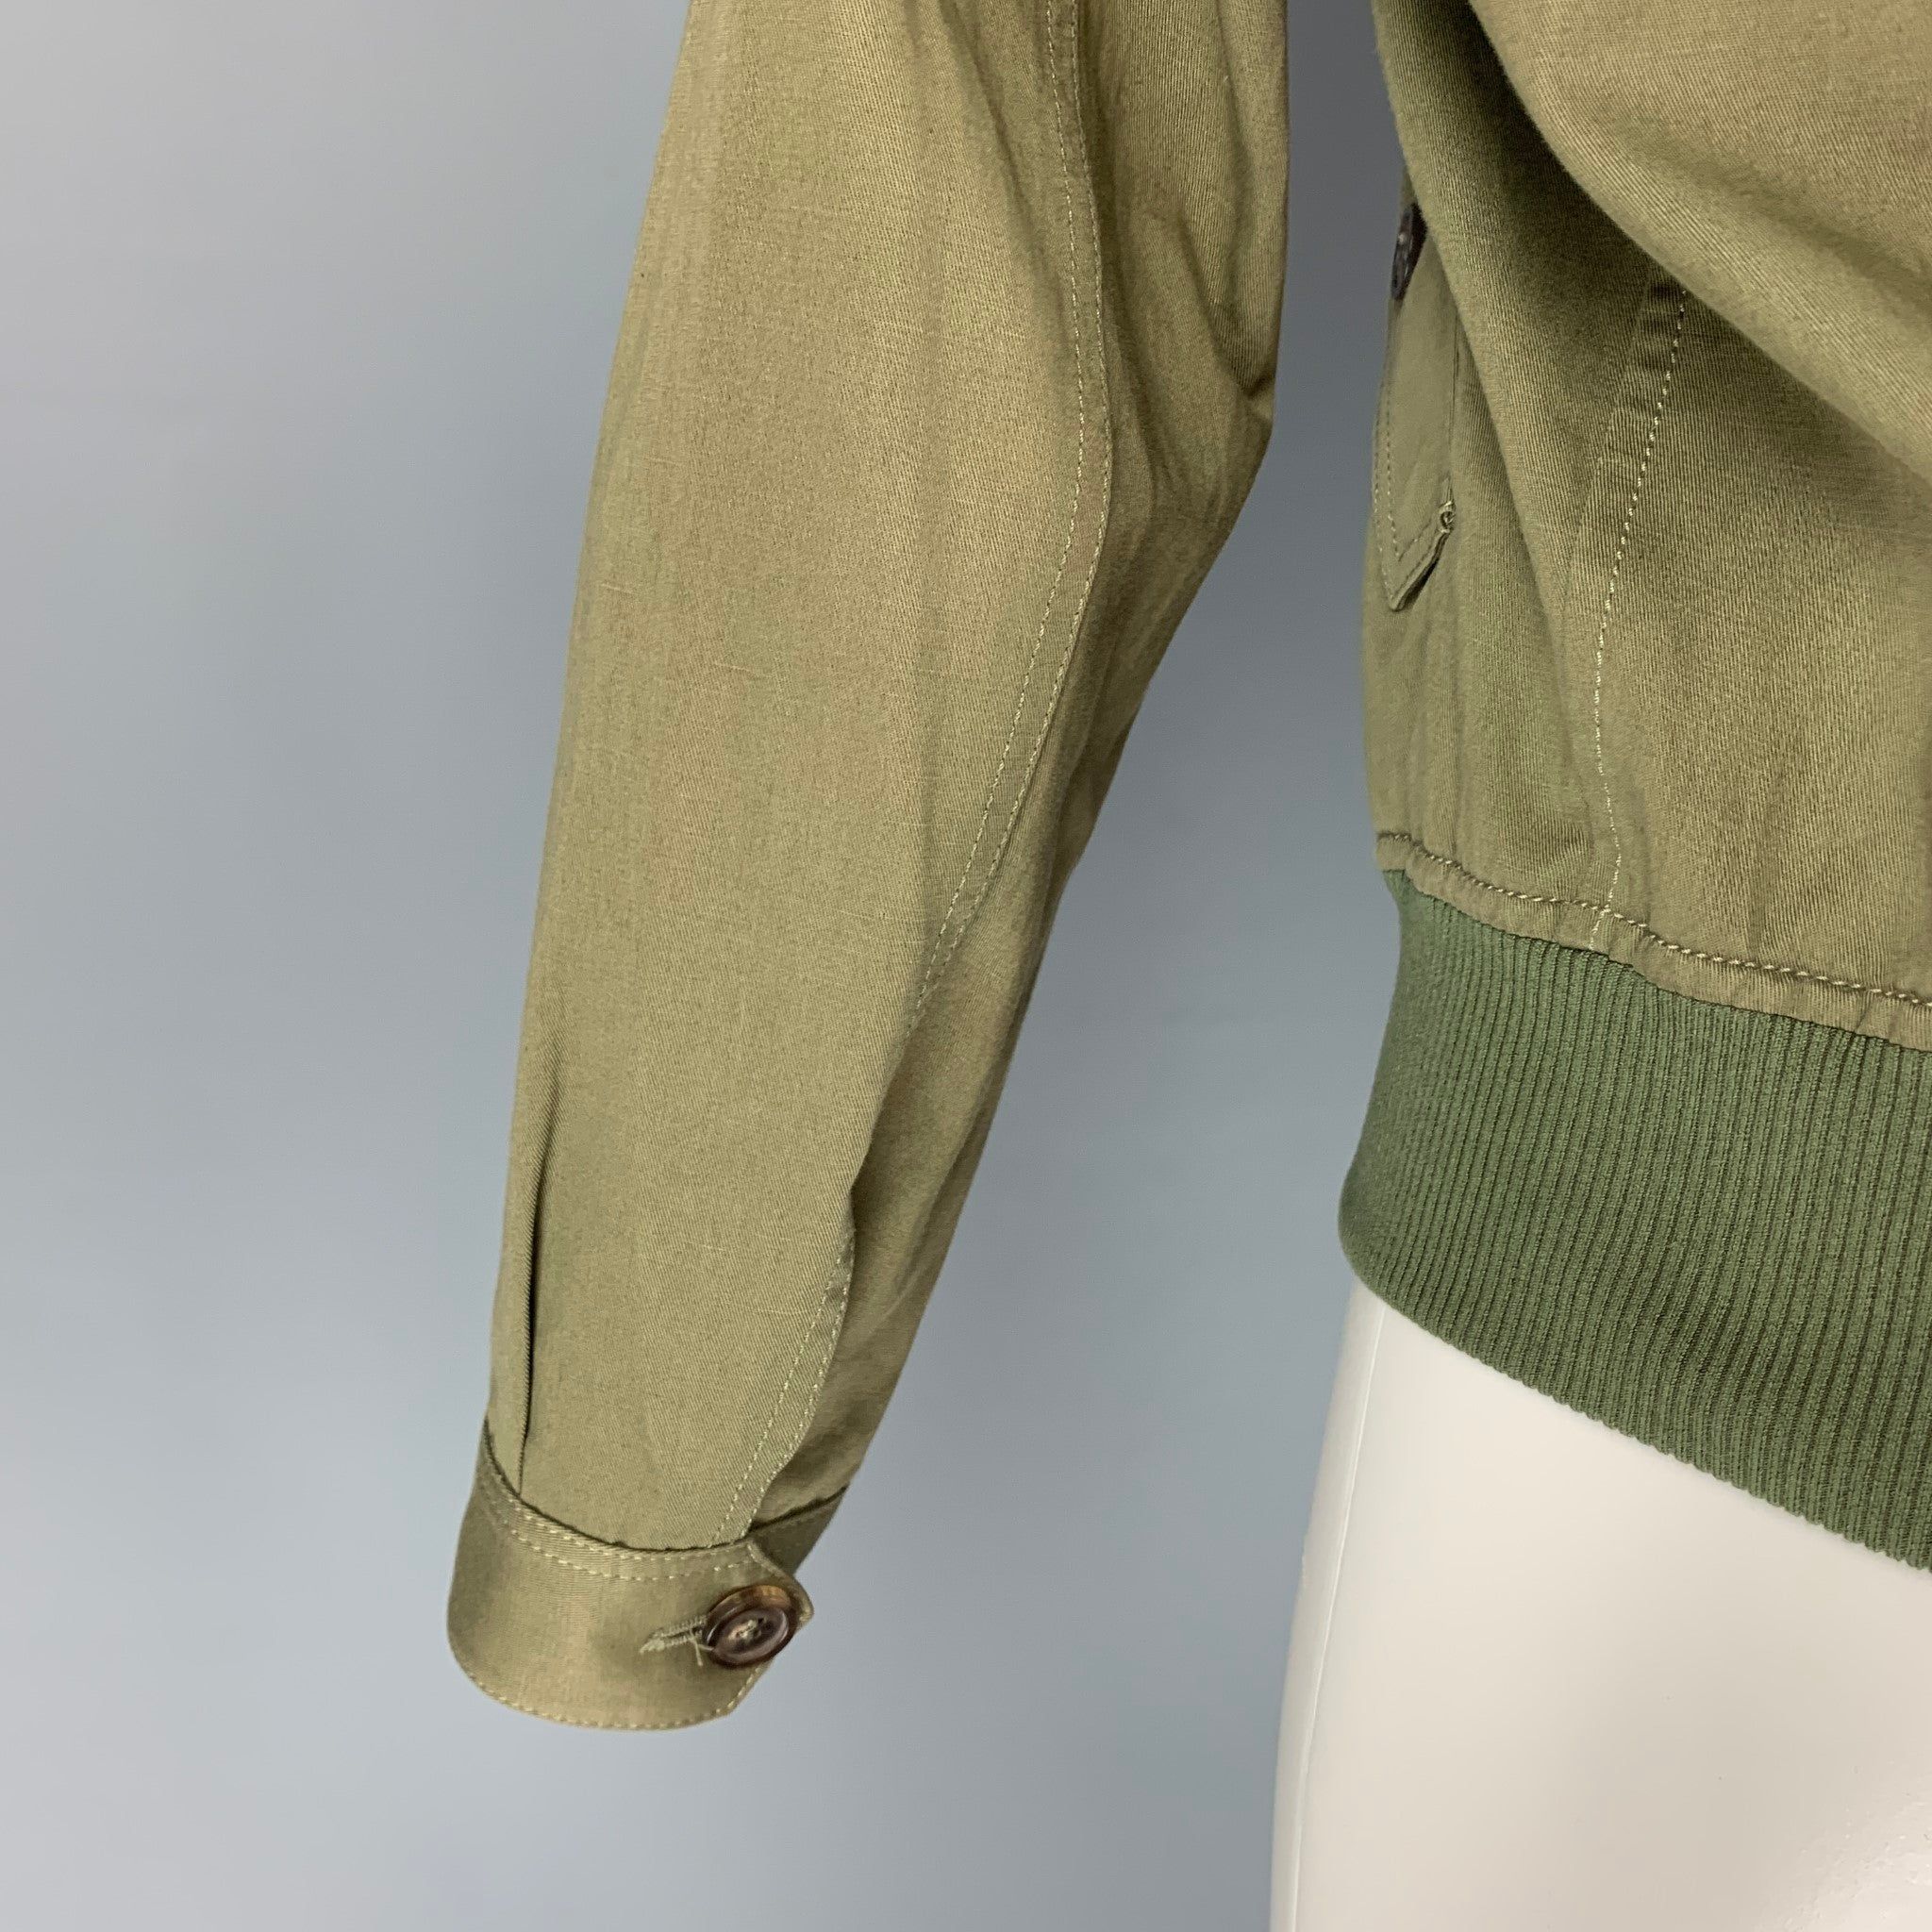 Roberto Cavalli 2016 Green Beaded Cotton Linen Zip Up Jacket Size US S / EU 44-46 / 1 - 4 Thumbnail